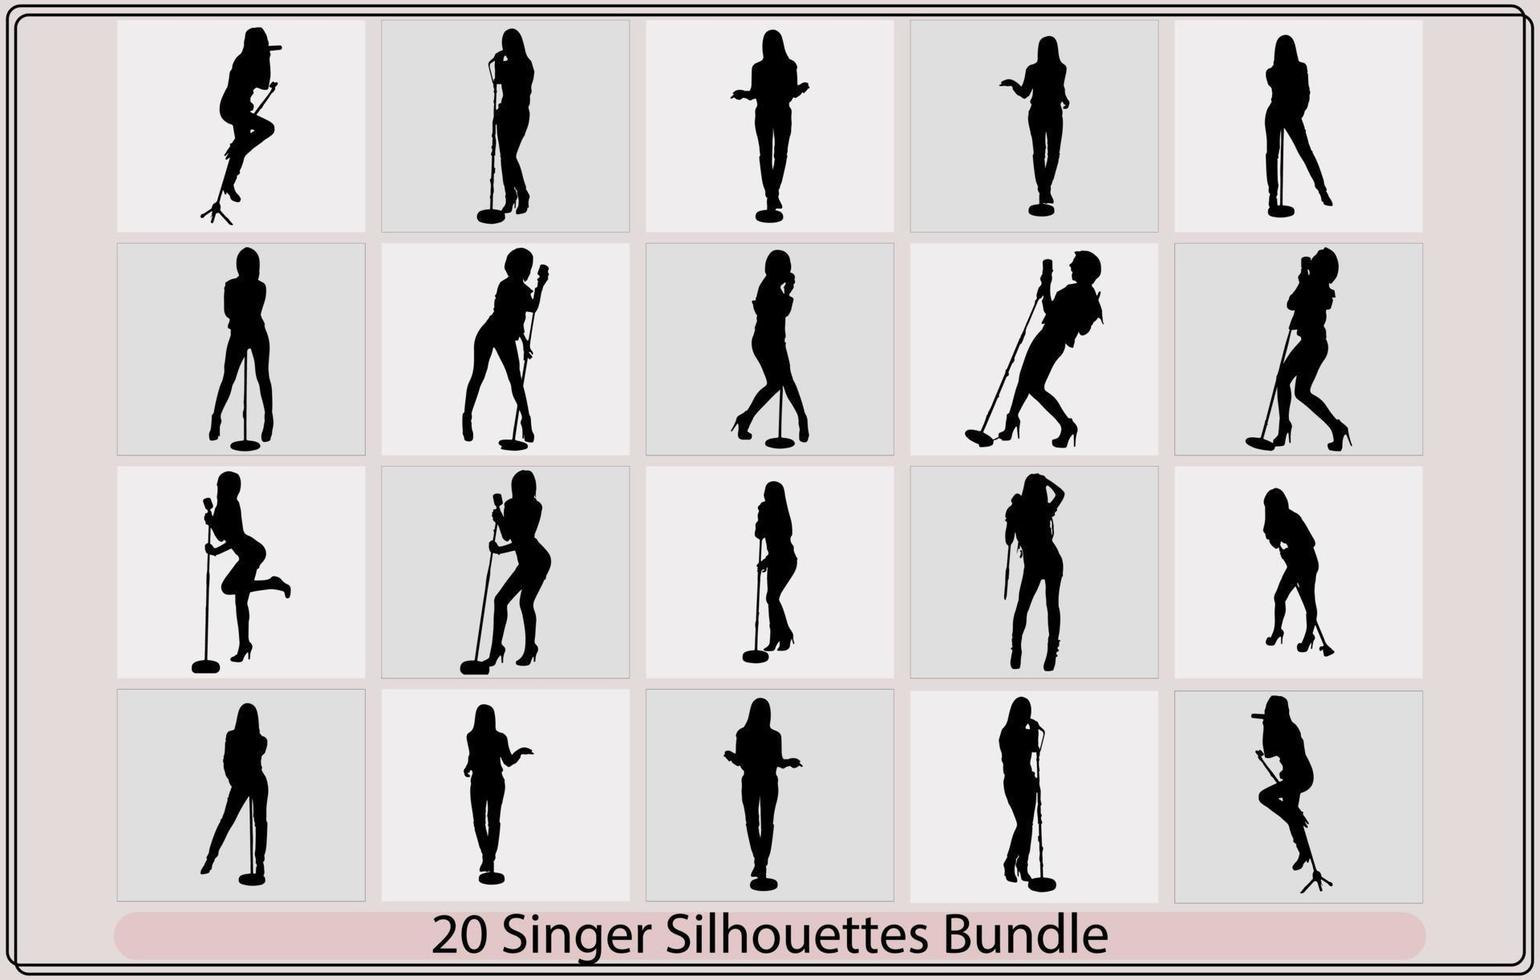 hombres y mujer cantante siluetas en diferente posa, cantante colección, cantando en silueta,macho cantante vector ilustración